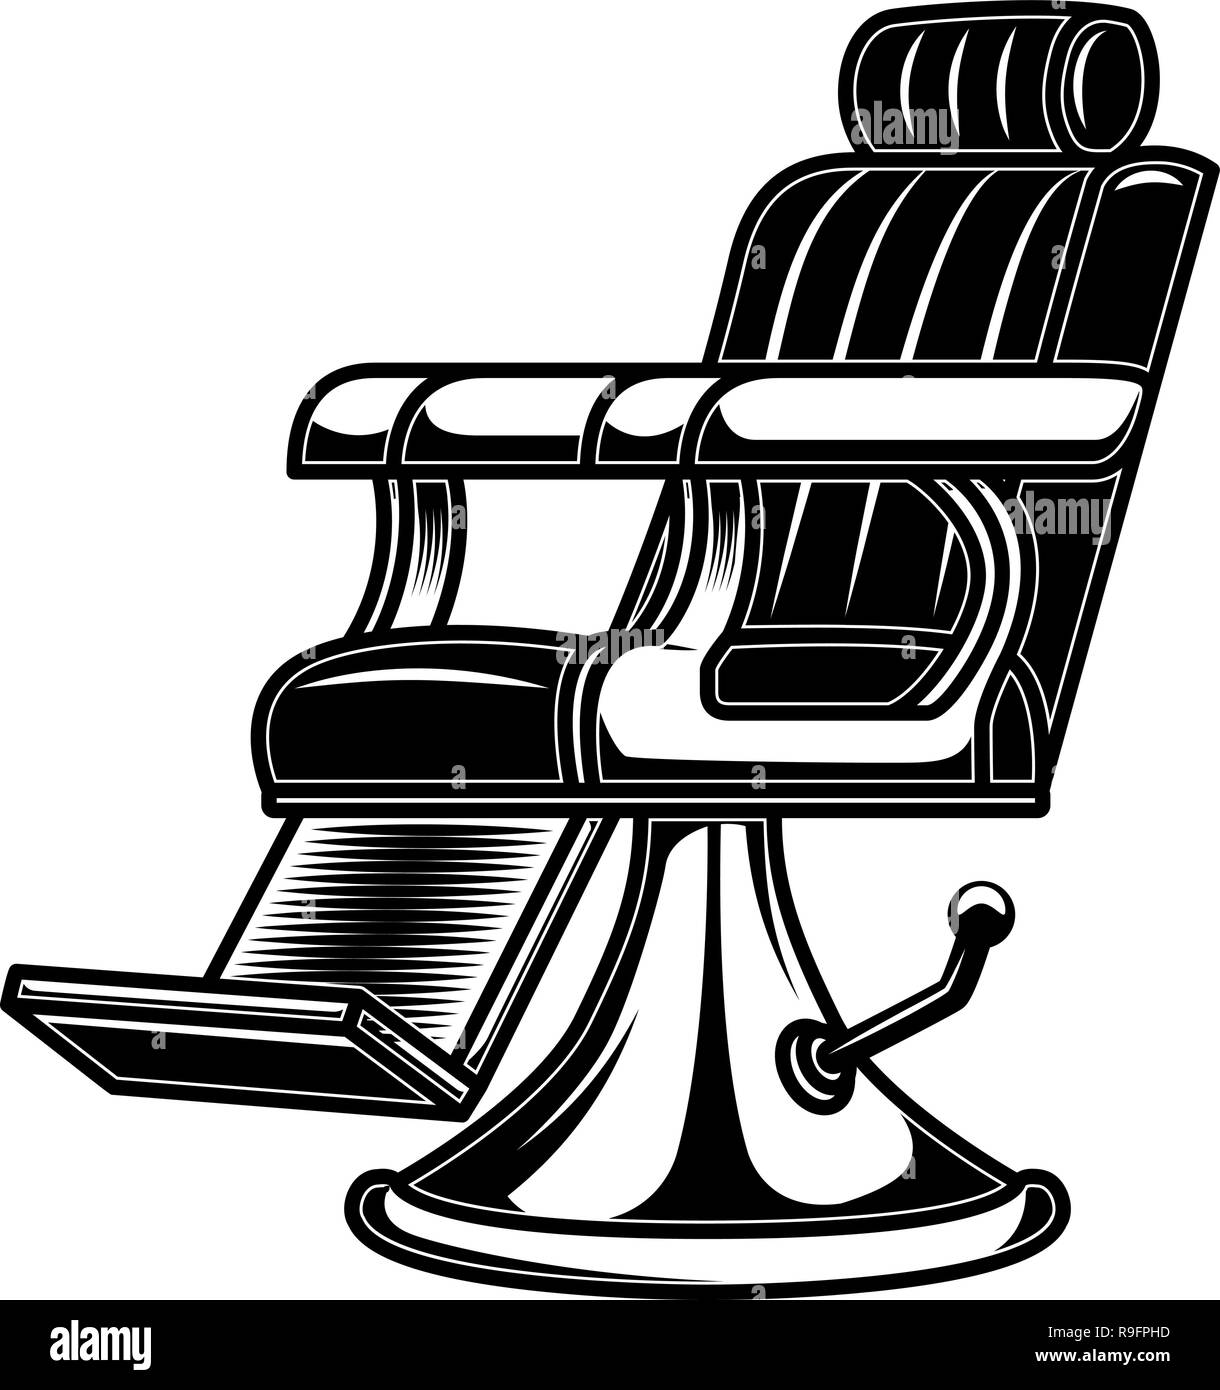 Barber shop chair illustration in engraving style. Design element for logo, label, sign, poster, t shirt. Vector illustration Stock Vector